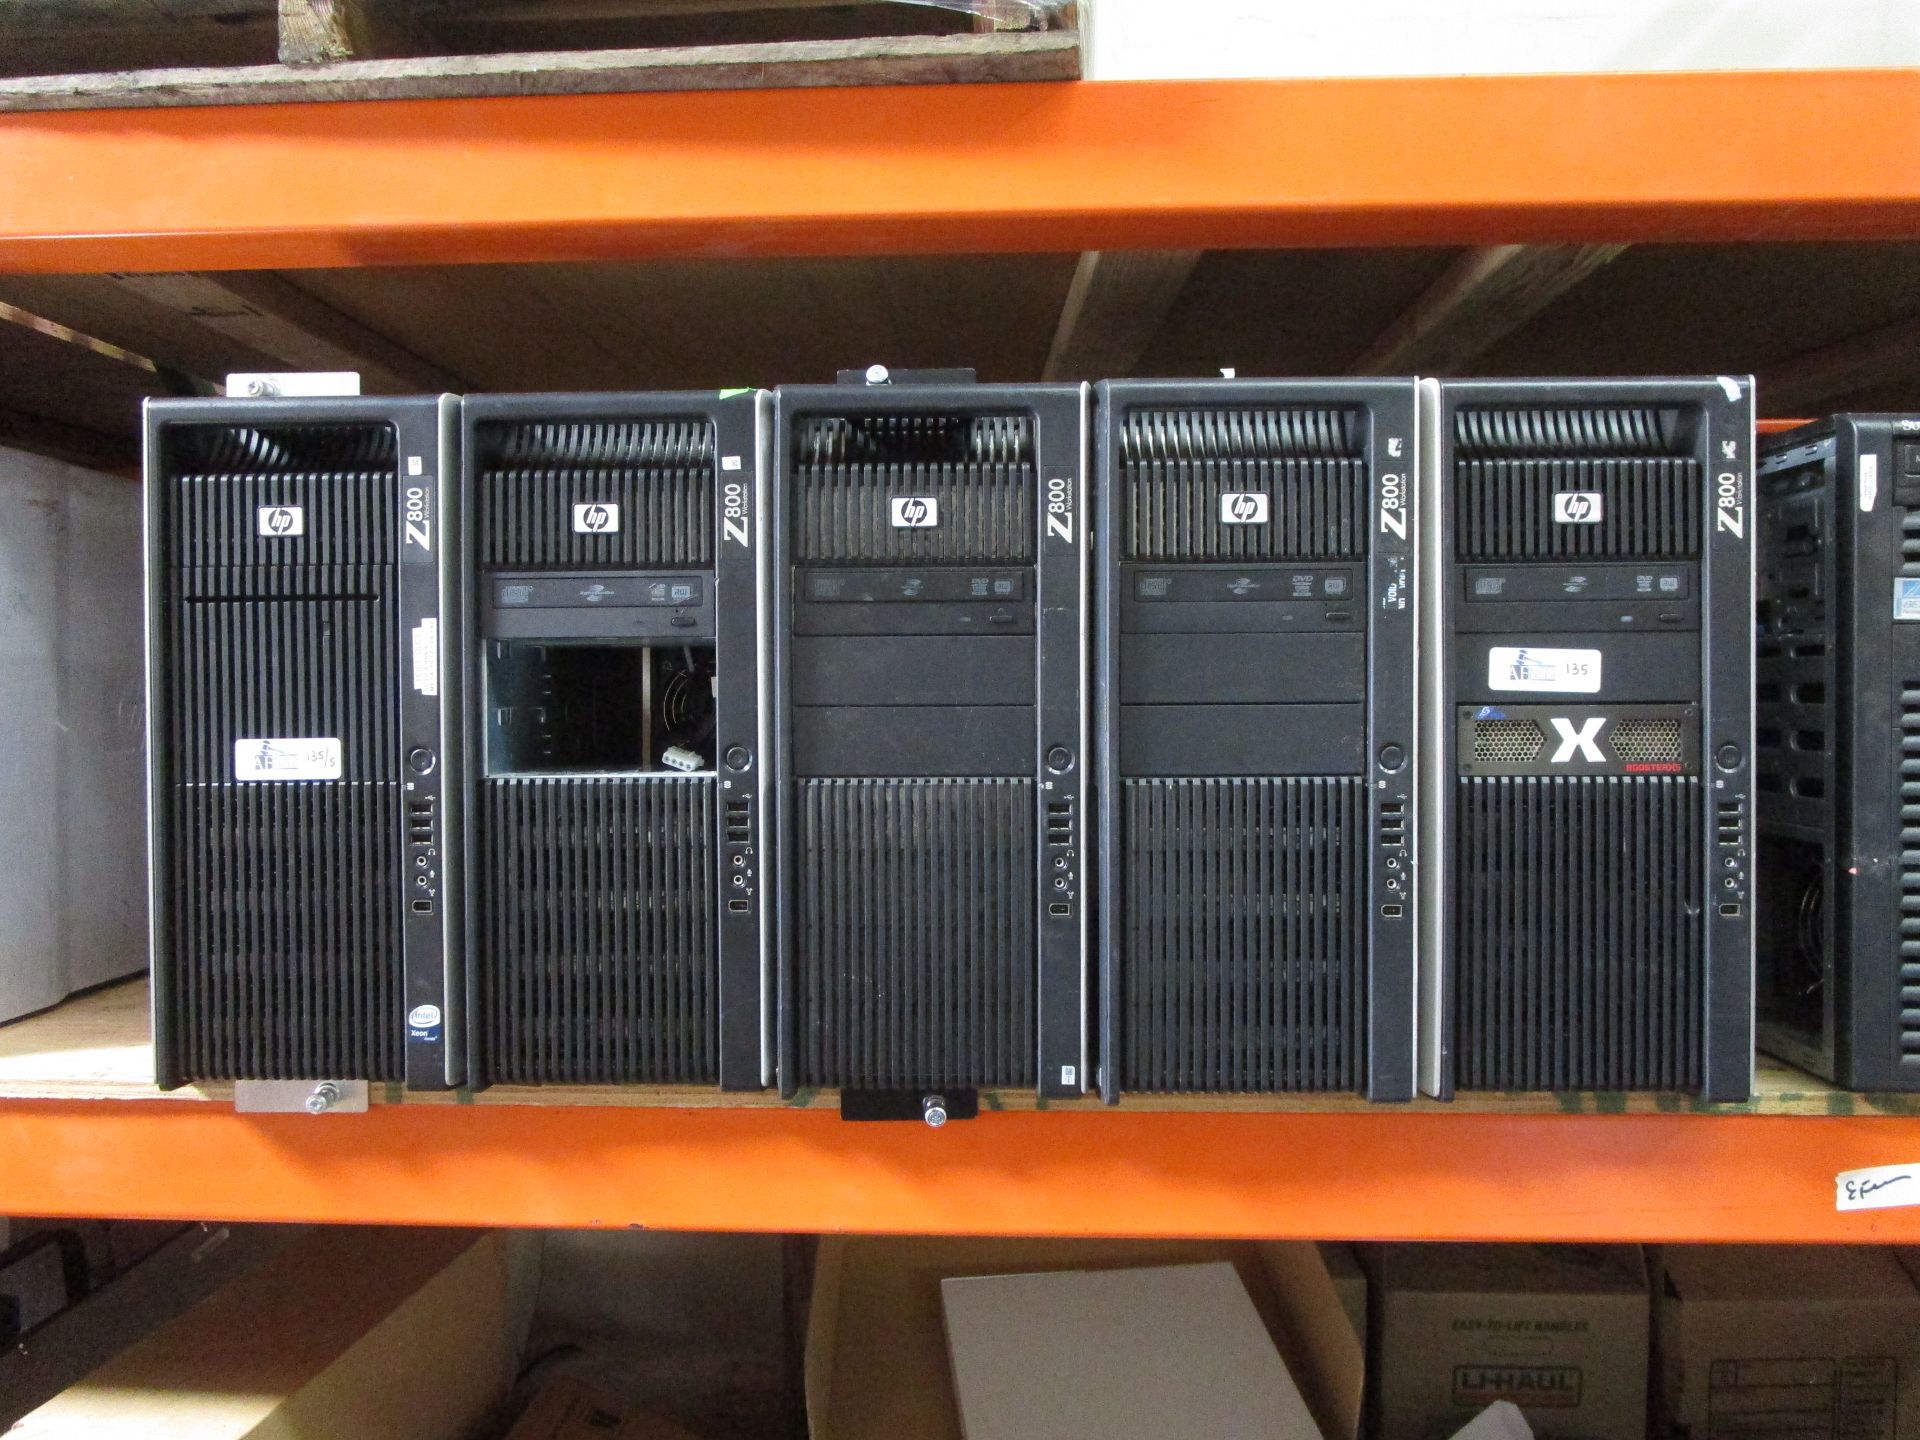 LOT OF 5 HPZ800 COMPUTERS